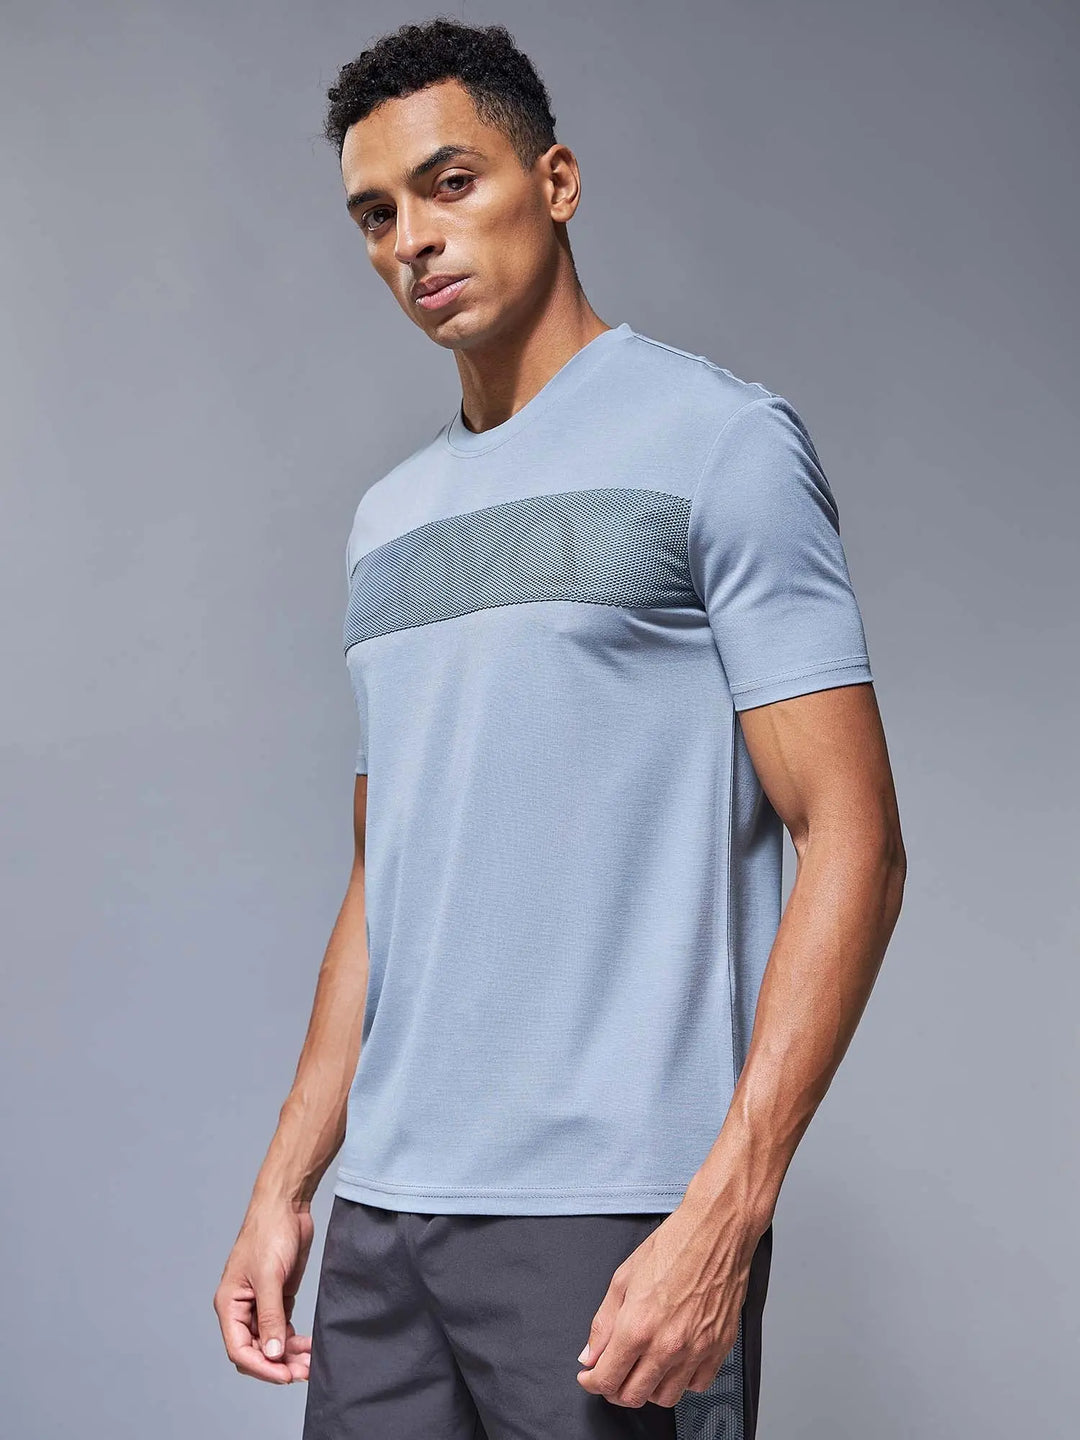 Grey Blue Chase t-shirt CAVA athleisure